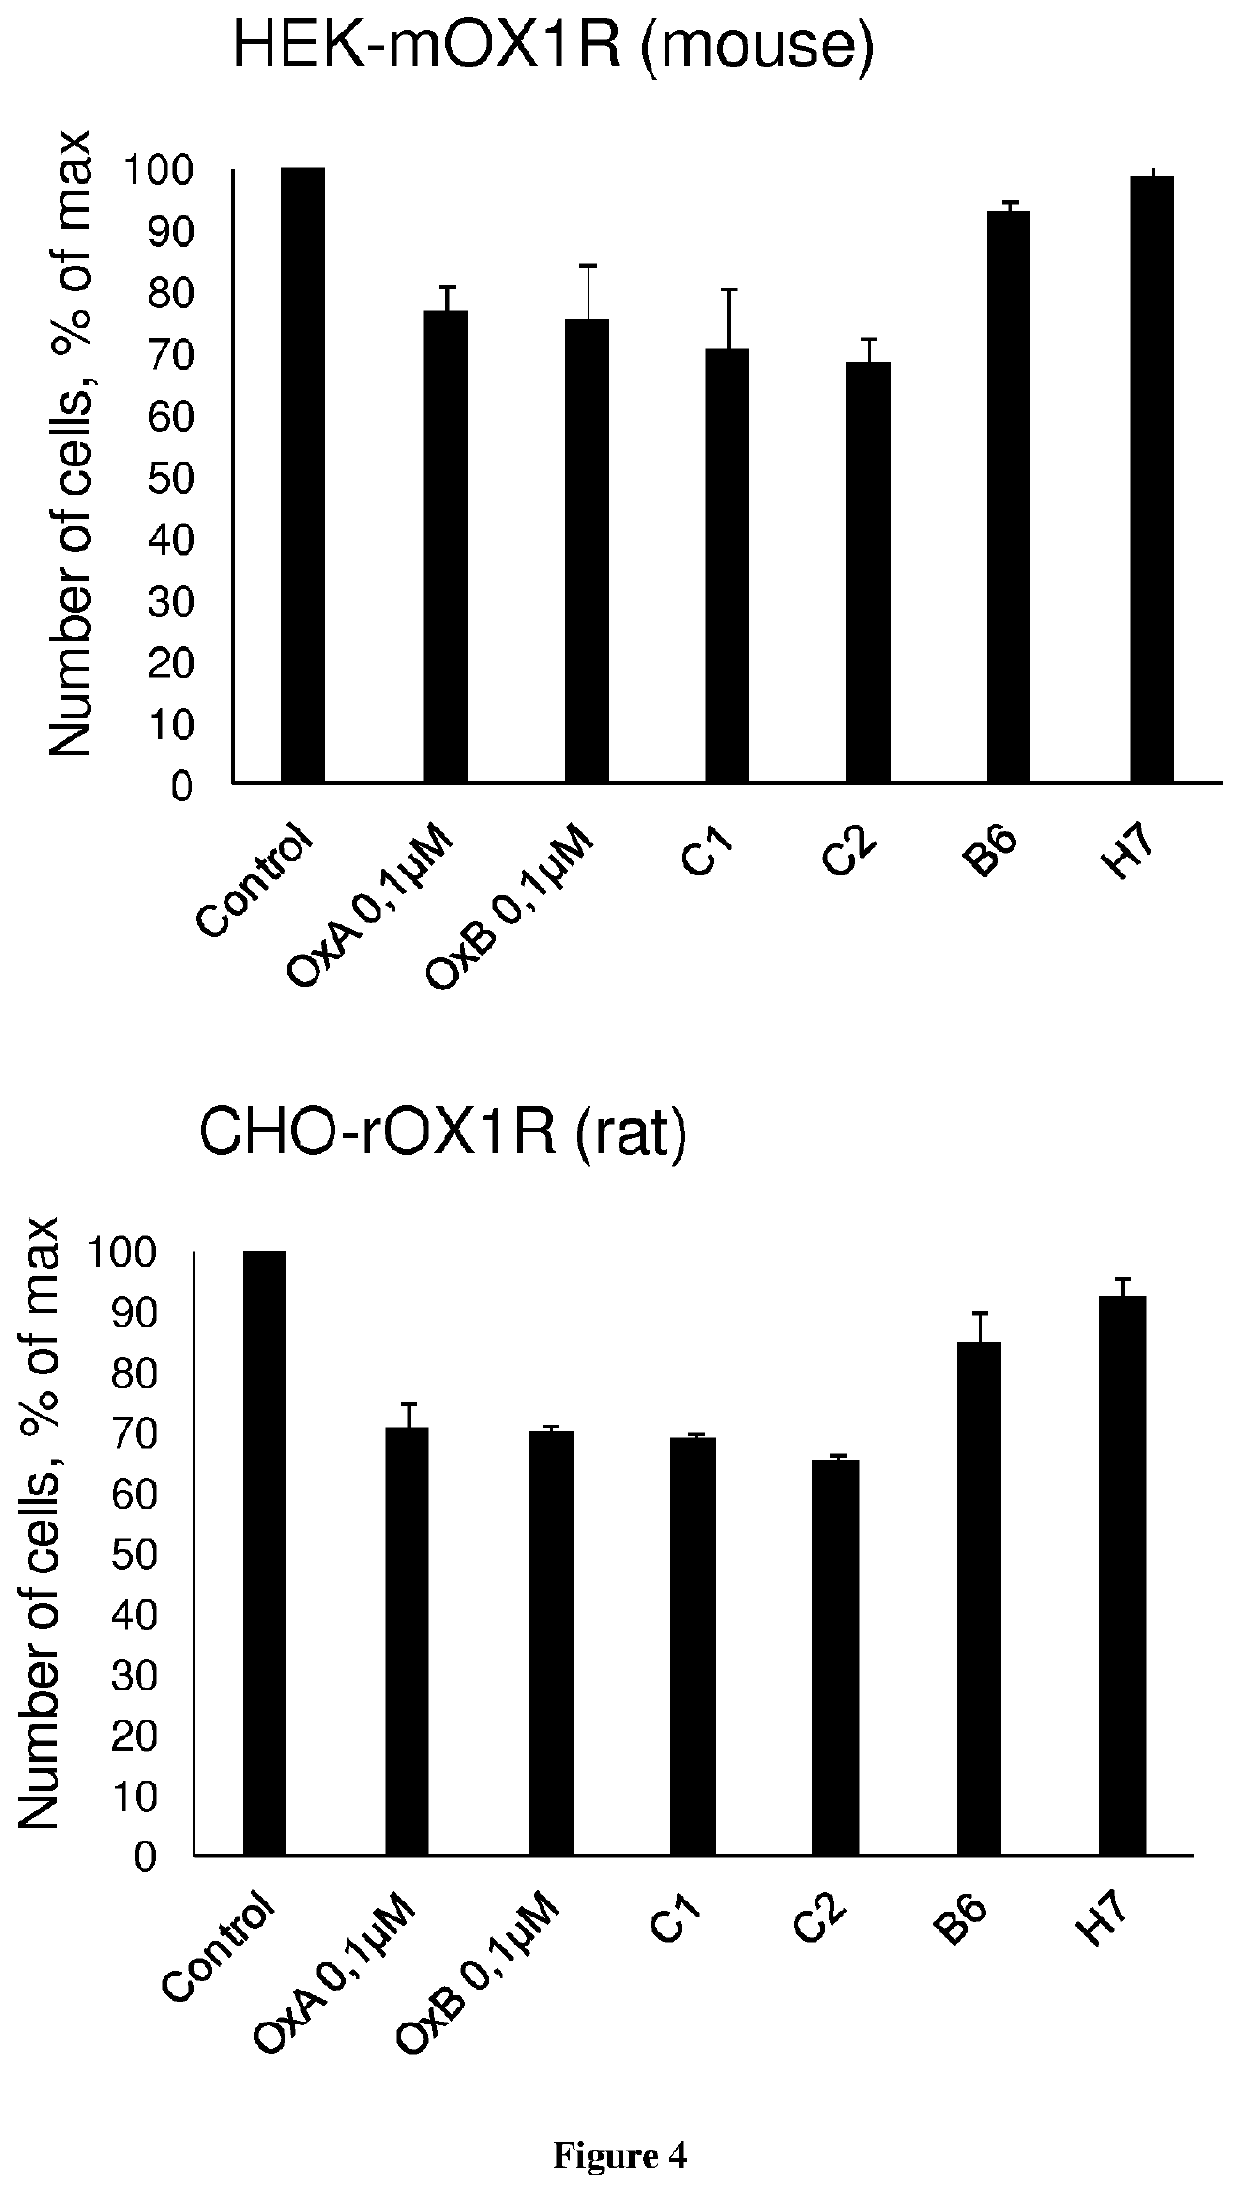 Human monoclonal antibodies against orexin receptor type 1